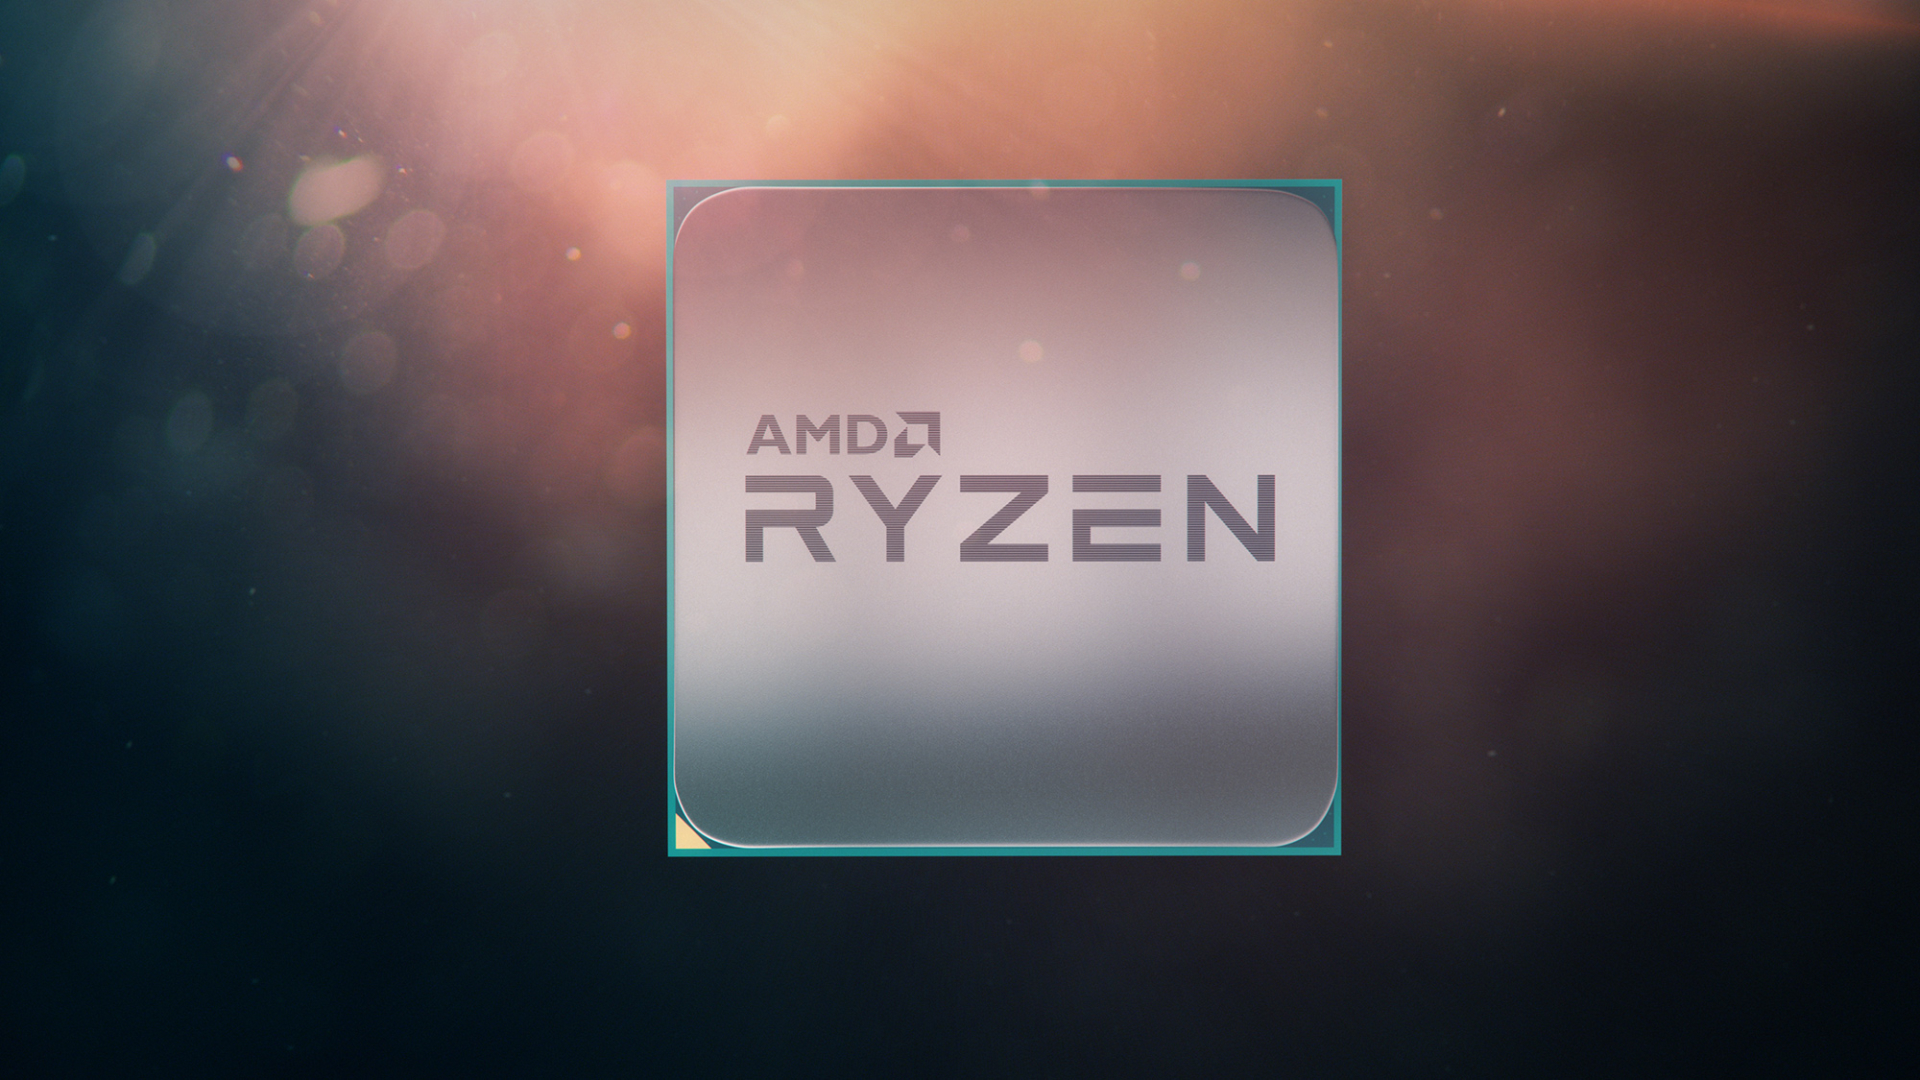 AMD Ryzen 7000 GTX 1650 Windows 11 AMD 4700S Ryzen 5000G Zen 4 Ryzen 5000 Ryzen 7 5800X Zen 3Ryzen 5000 Ryzen 9 4950X Ryzen 7 4700G Ryzen 3 4300U Ryzen 7 3800XT B440 X470 Zen 3 AMD AM5 Apple M1